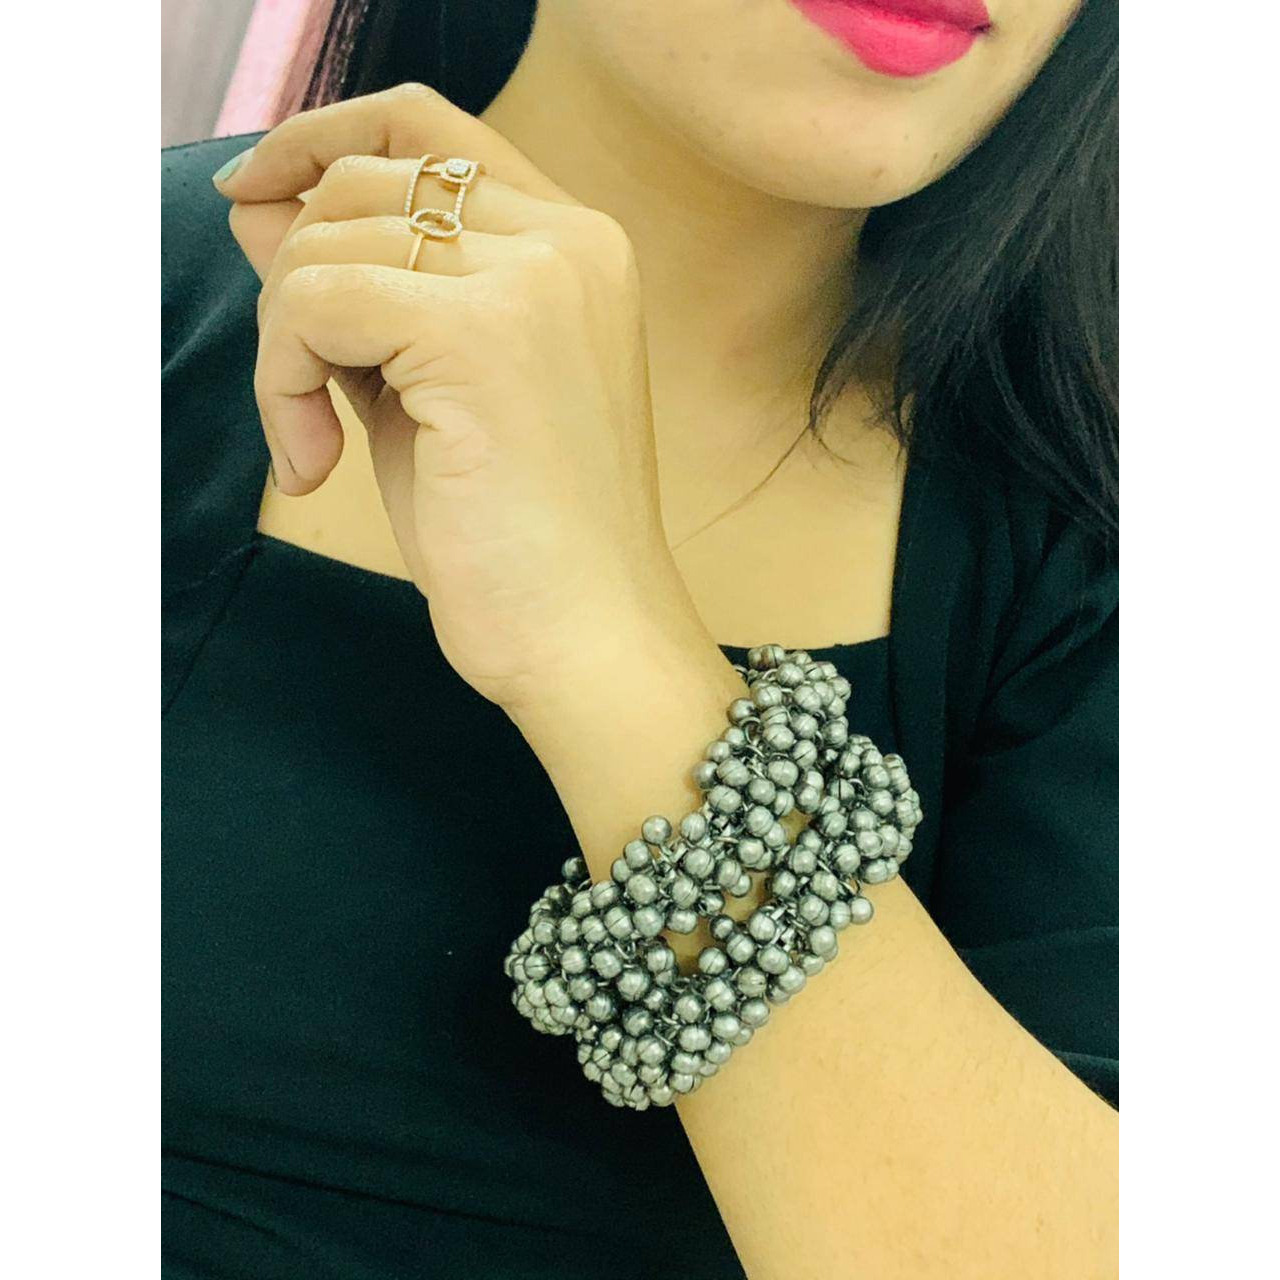 Ghunghroo bangle/kada,  Silver look alike hand bracelet, oxidised German silver Kada, black polish kada Indian jewelry, boho hippie jewelry,